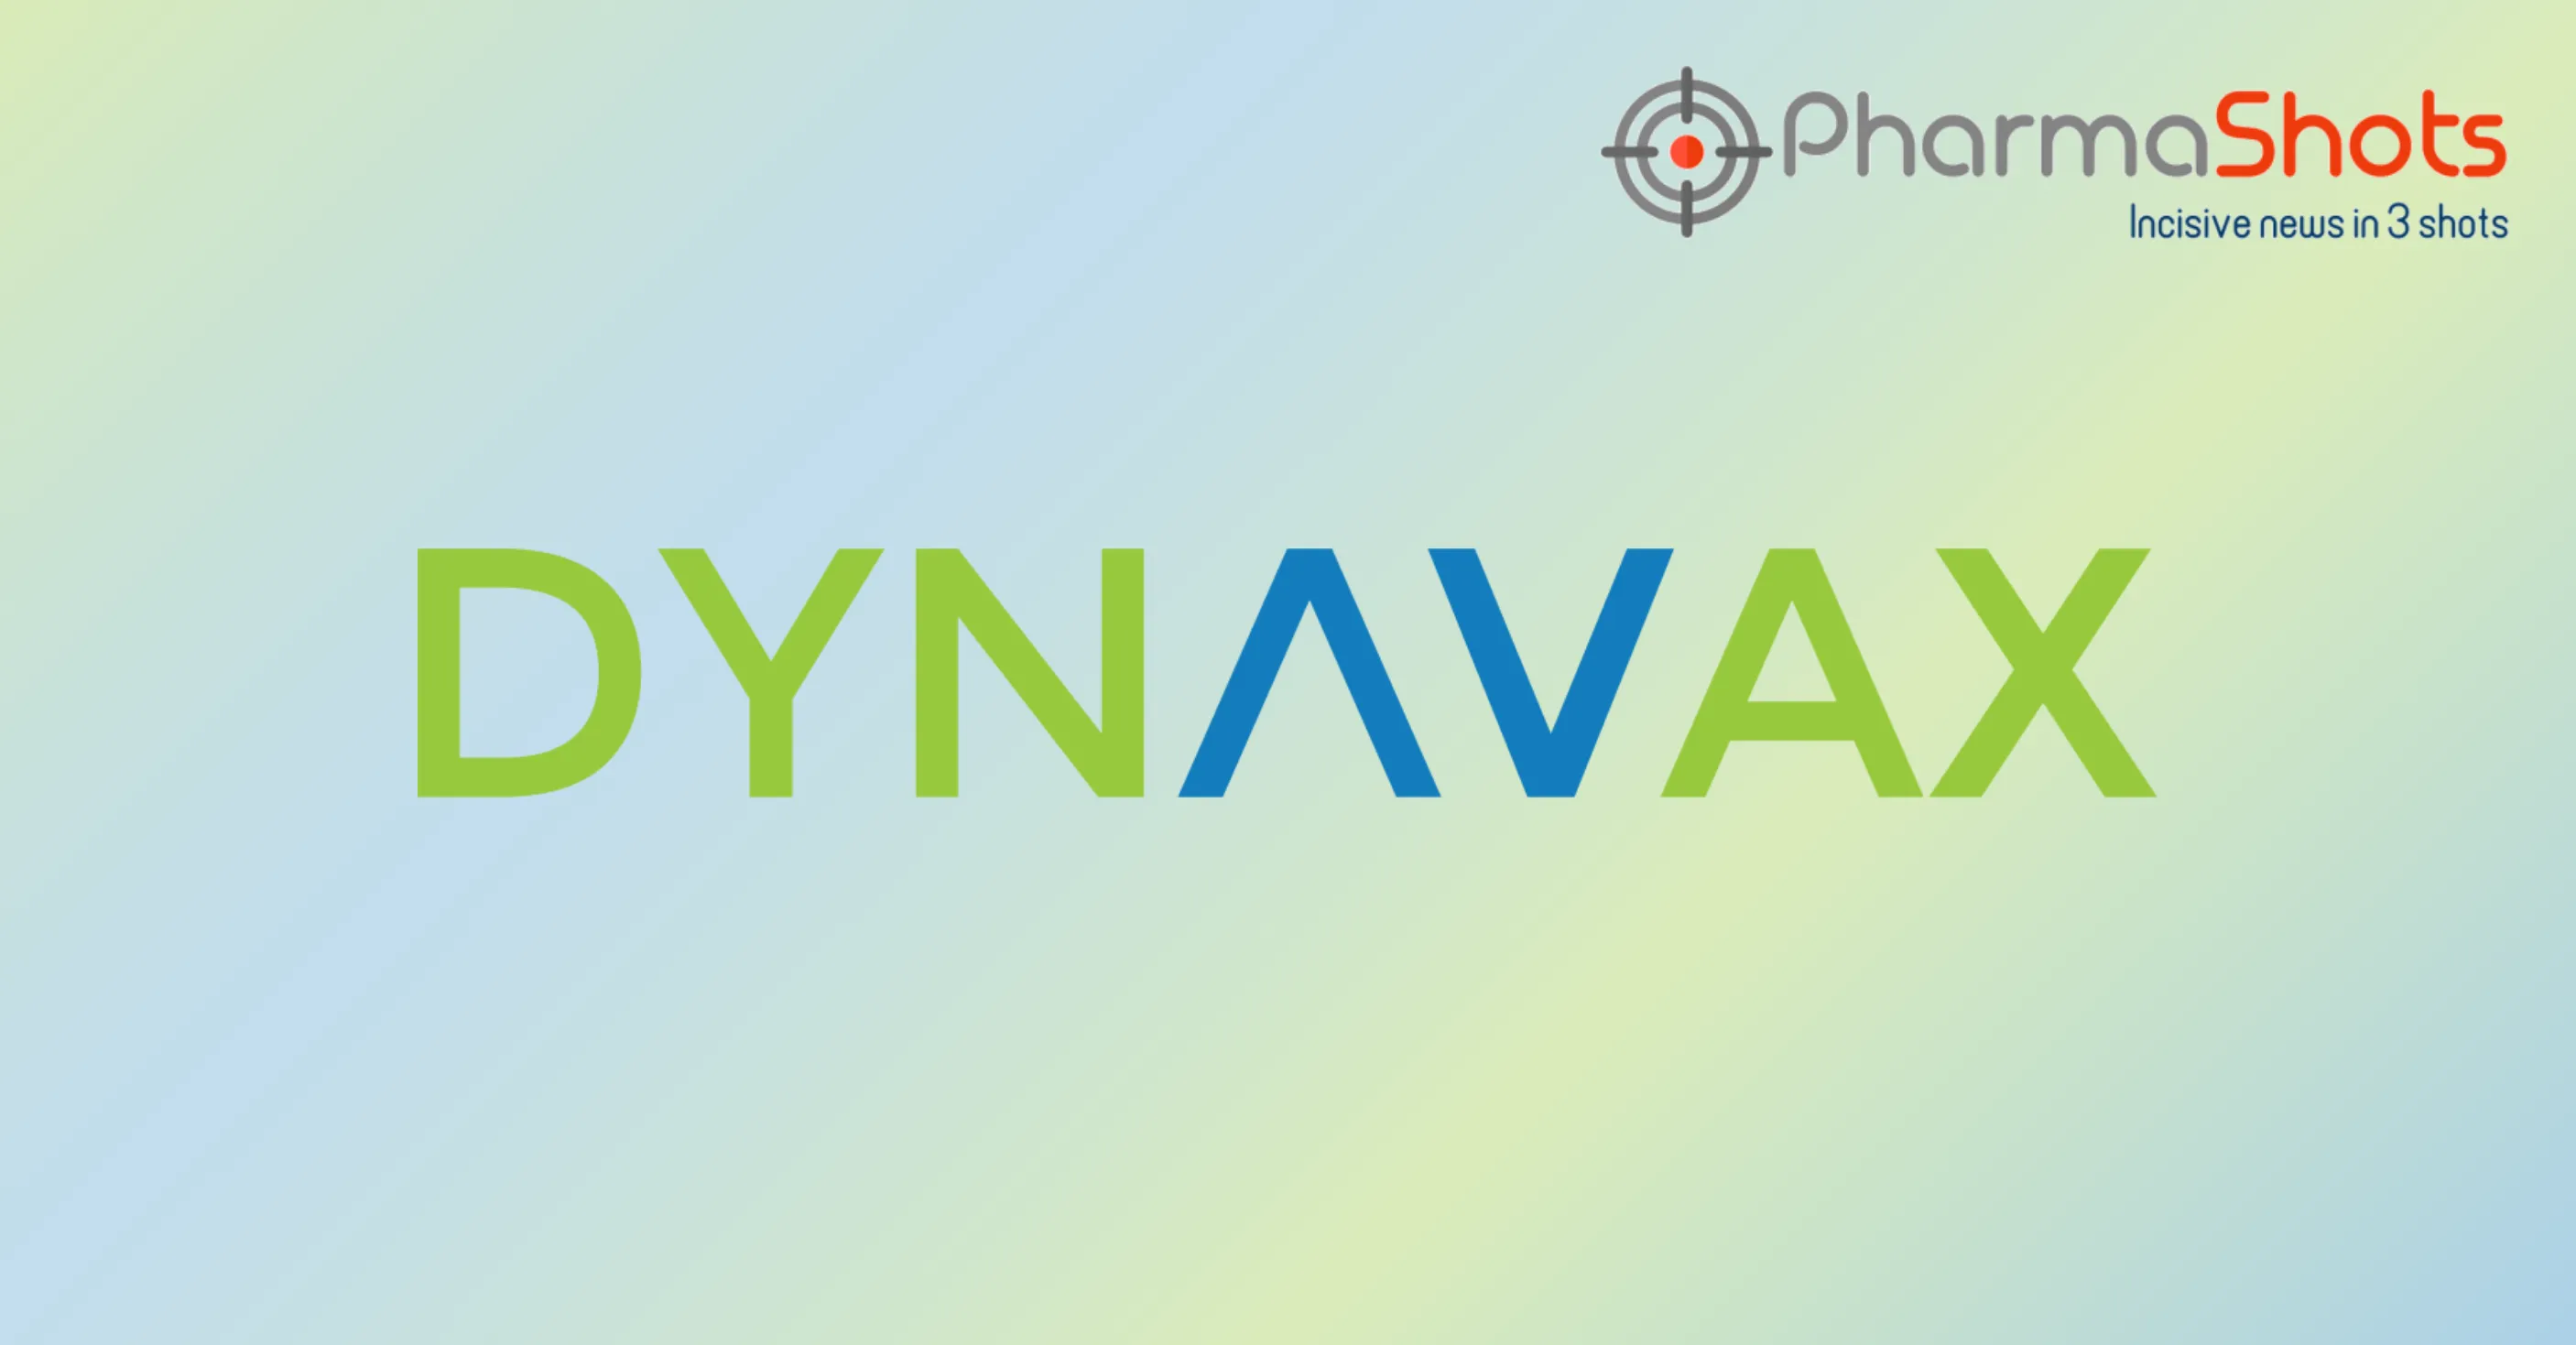 The US FDA Rejects Dynavax’ Four-Dose Heplisav-B Regimen for Adults on Hemodialysis